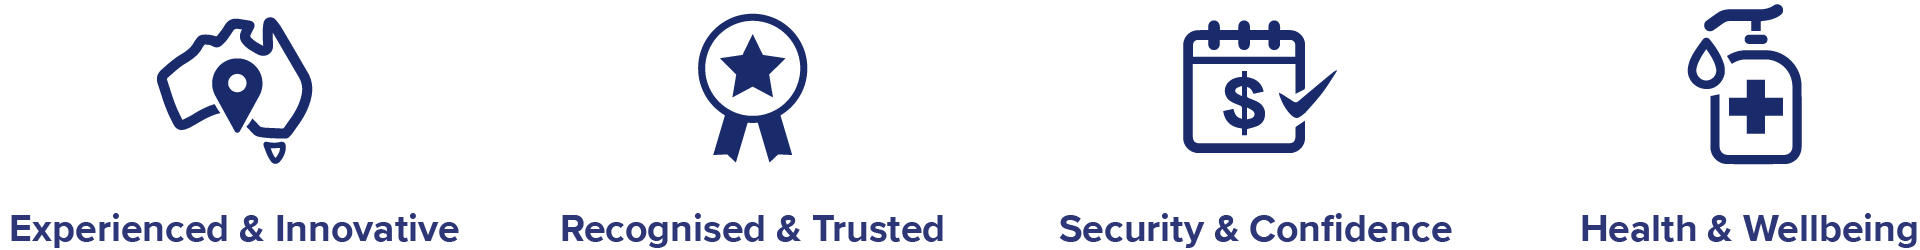 Assurance Icons Logo Homepage